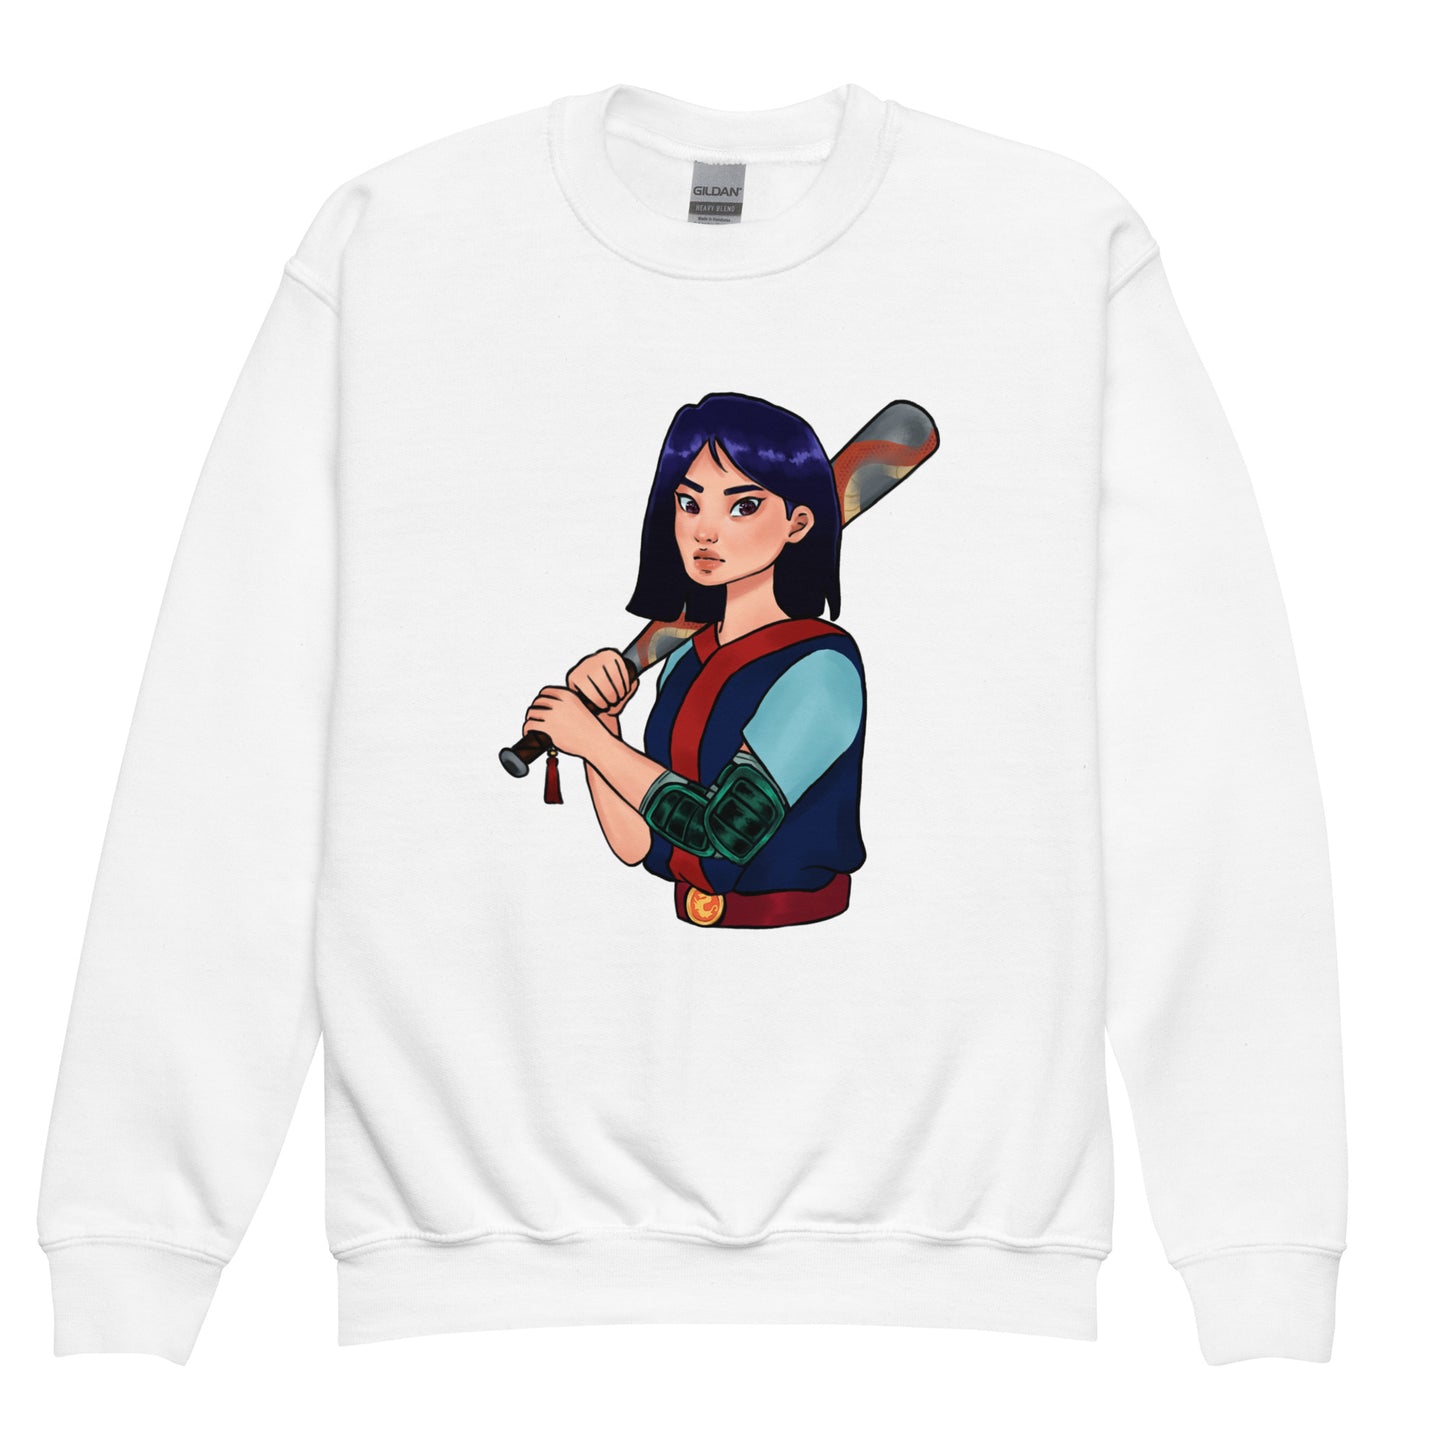 Mulan Inspired - Youth Crewneck Sweatshirt